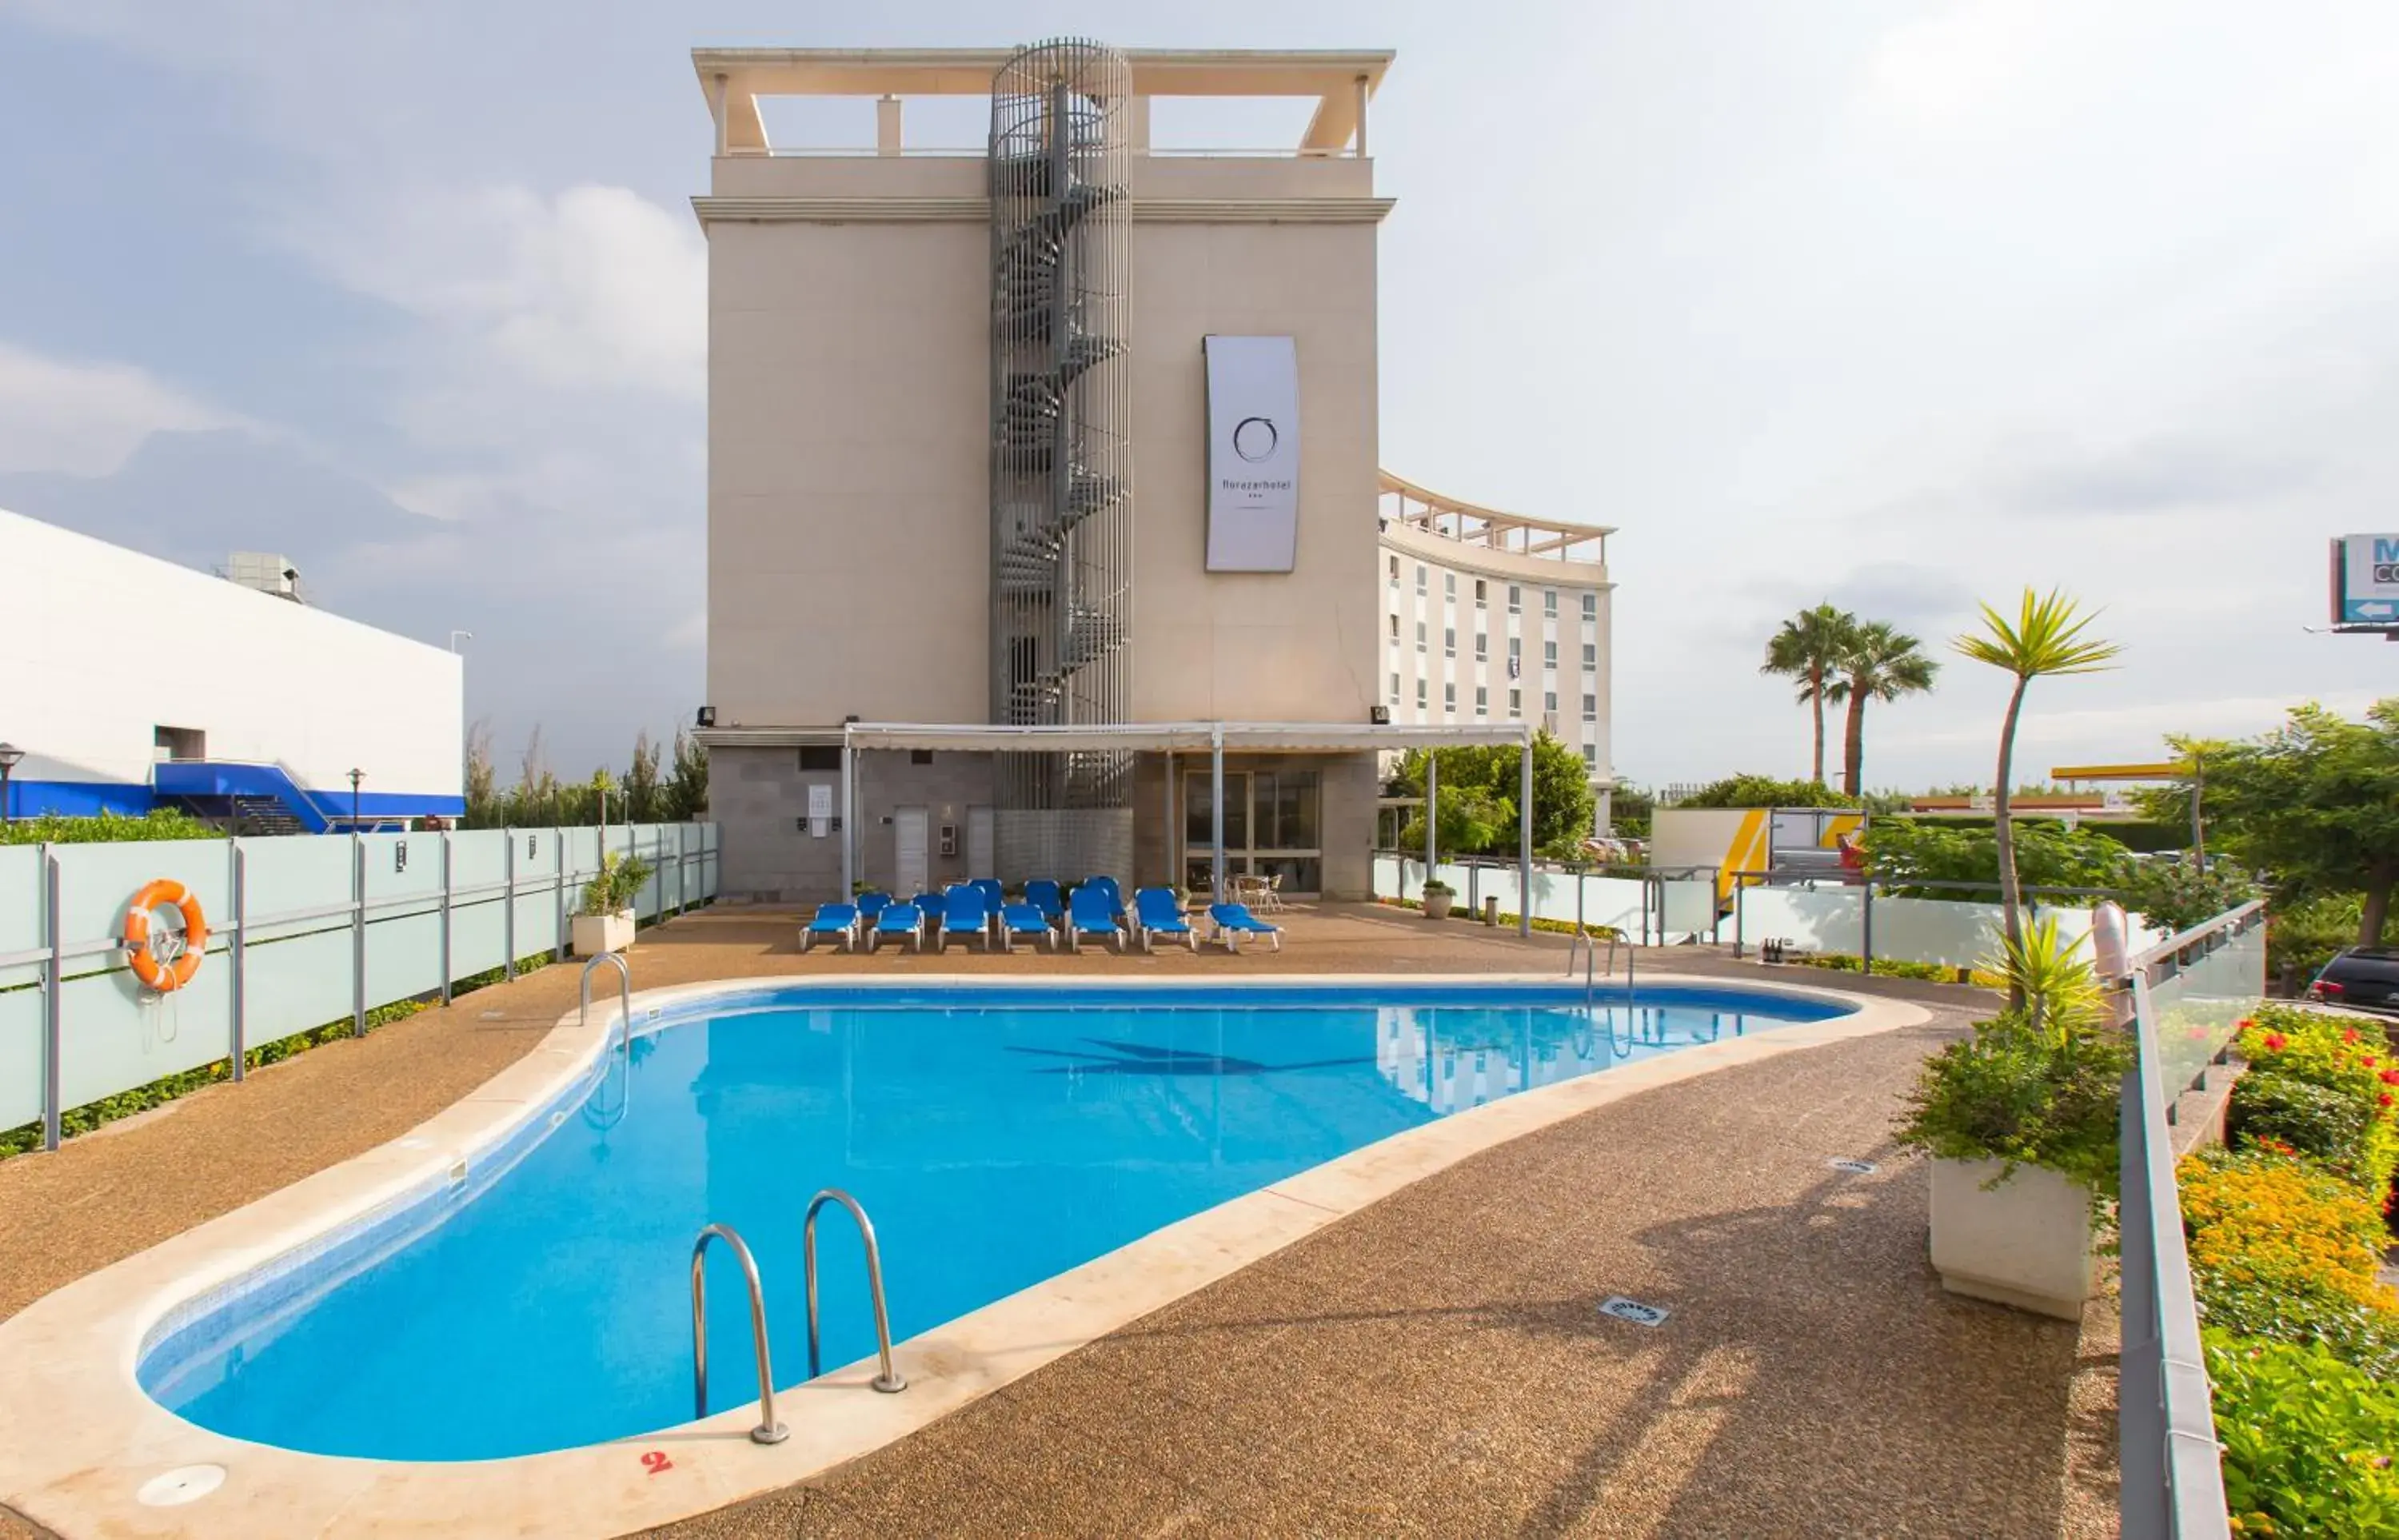 Swimming pool in Flag Hotel Valencia Florazar